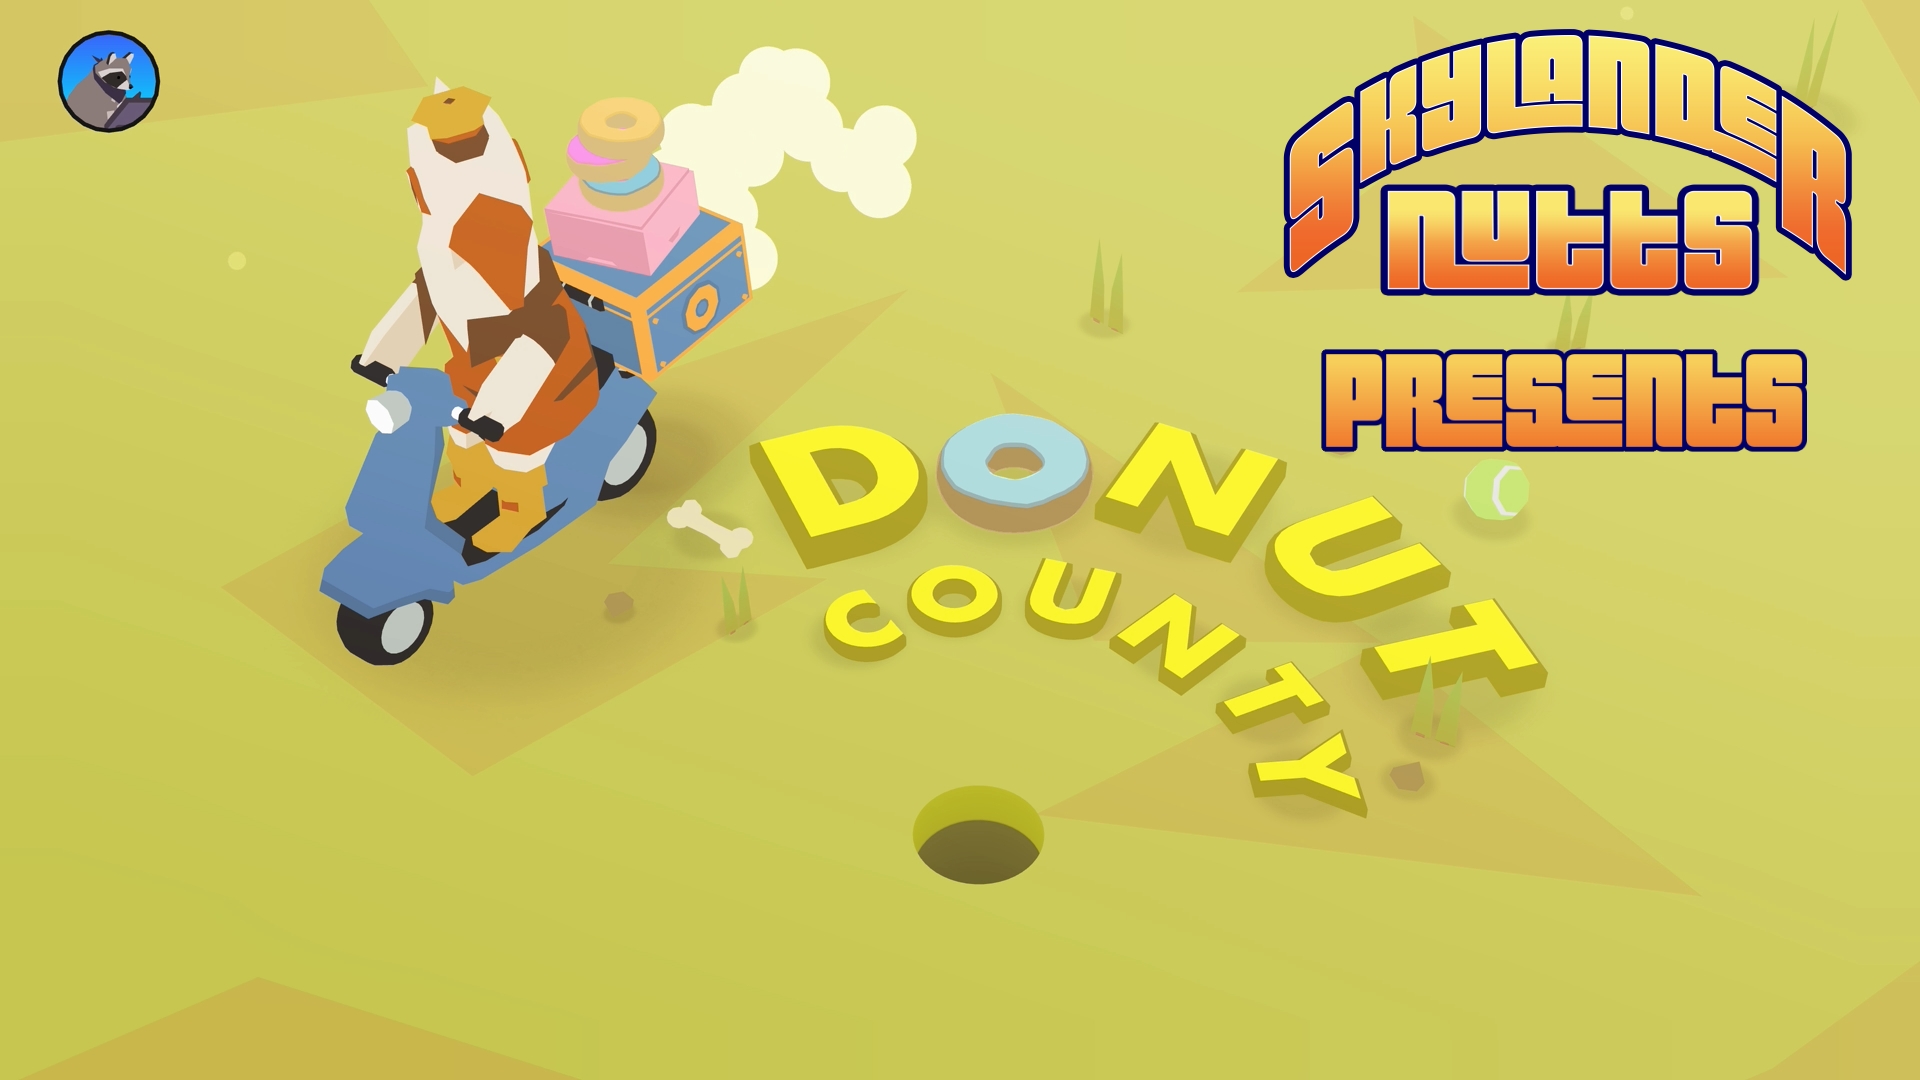 SkylanderNutts Presents Donut County